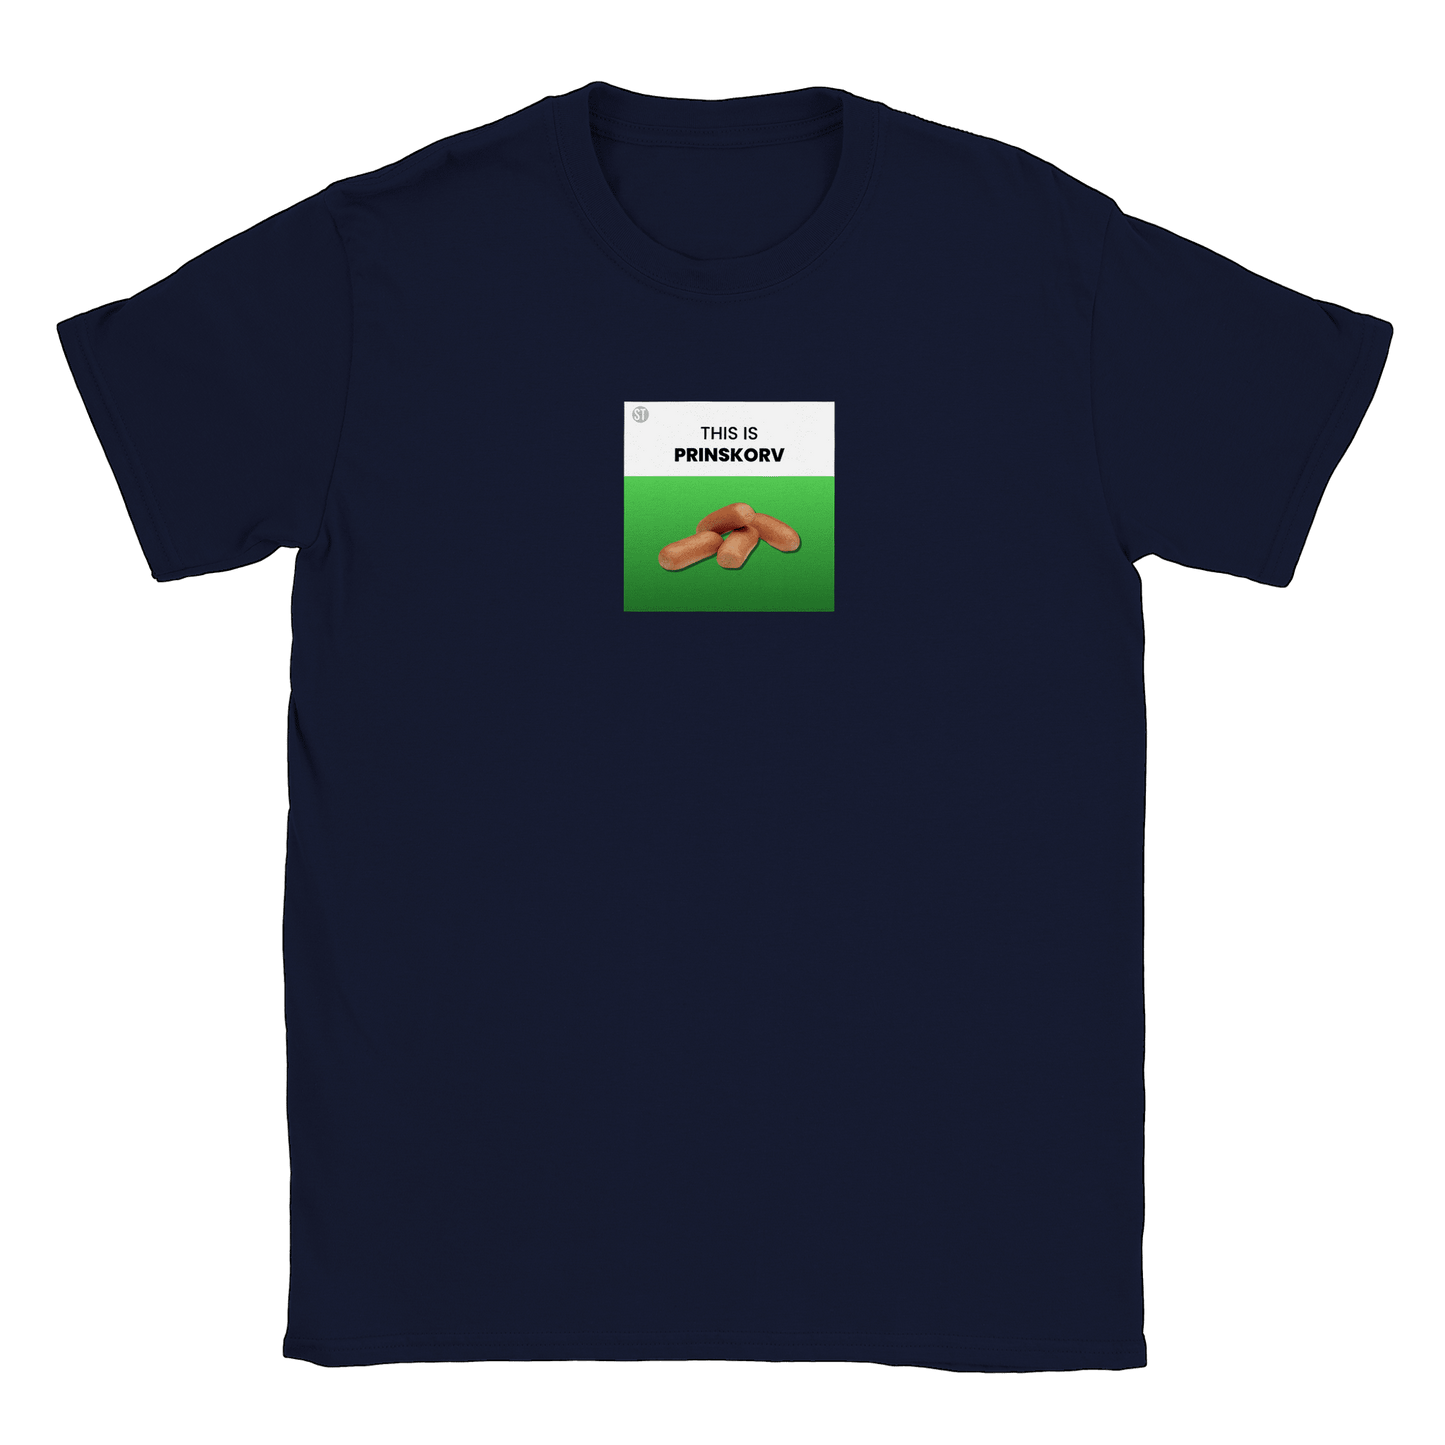 This is Prinskorv - T-shirt Navy